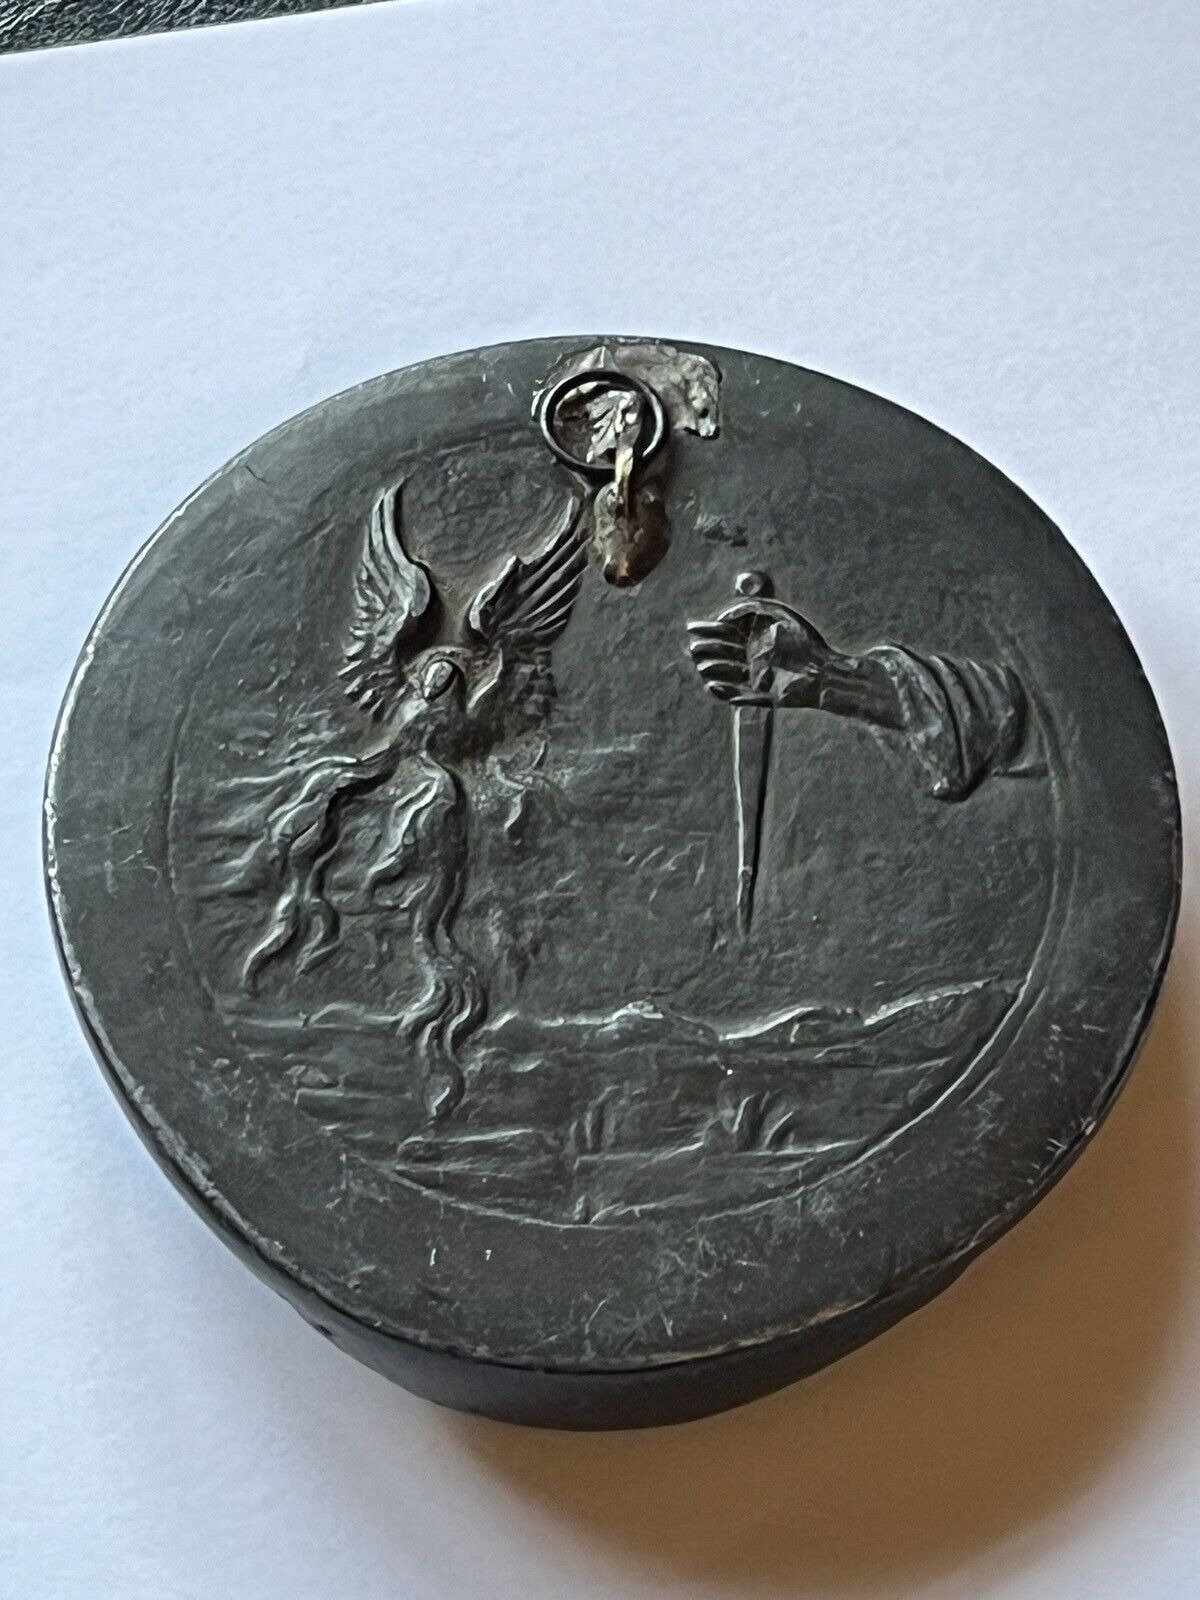 Girolamo Savonarola Medal 1453 , Medal of the preacher Girolamo Savonarola